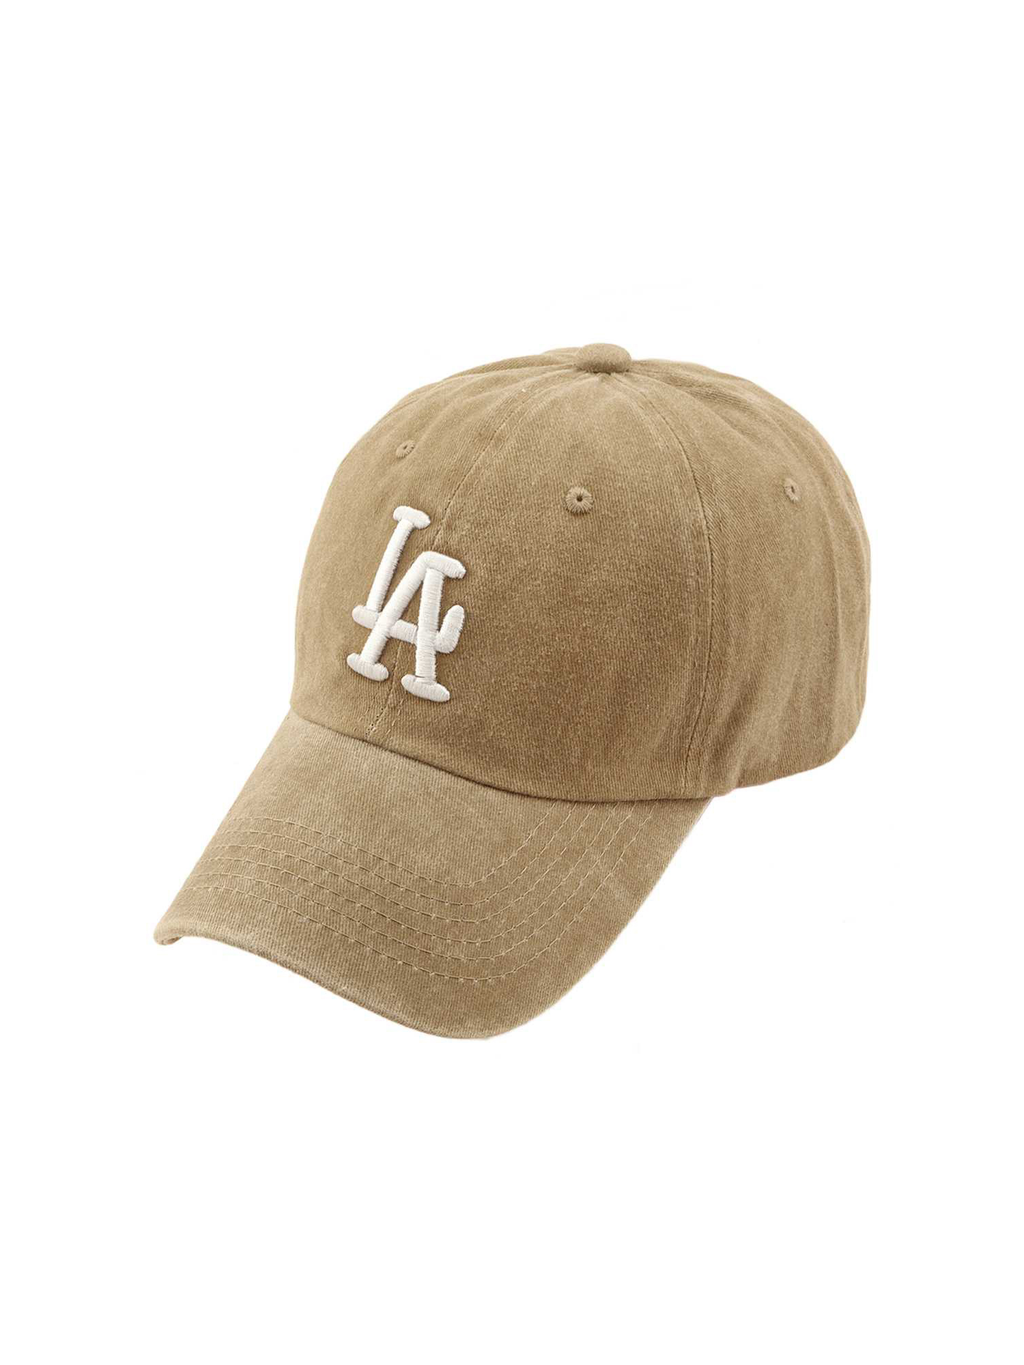 LA Baseball Cap in Khaki - Stitch And Feather